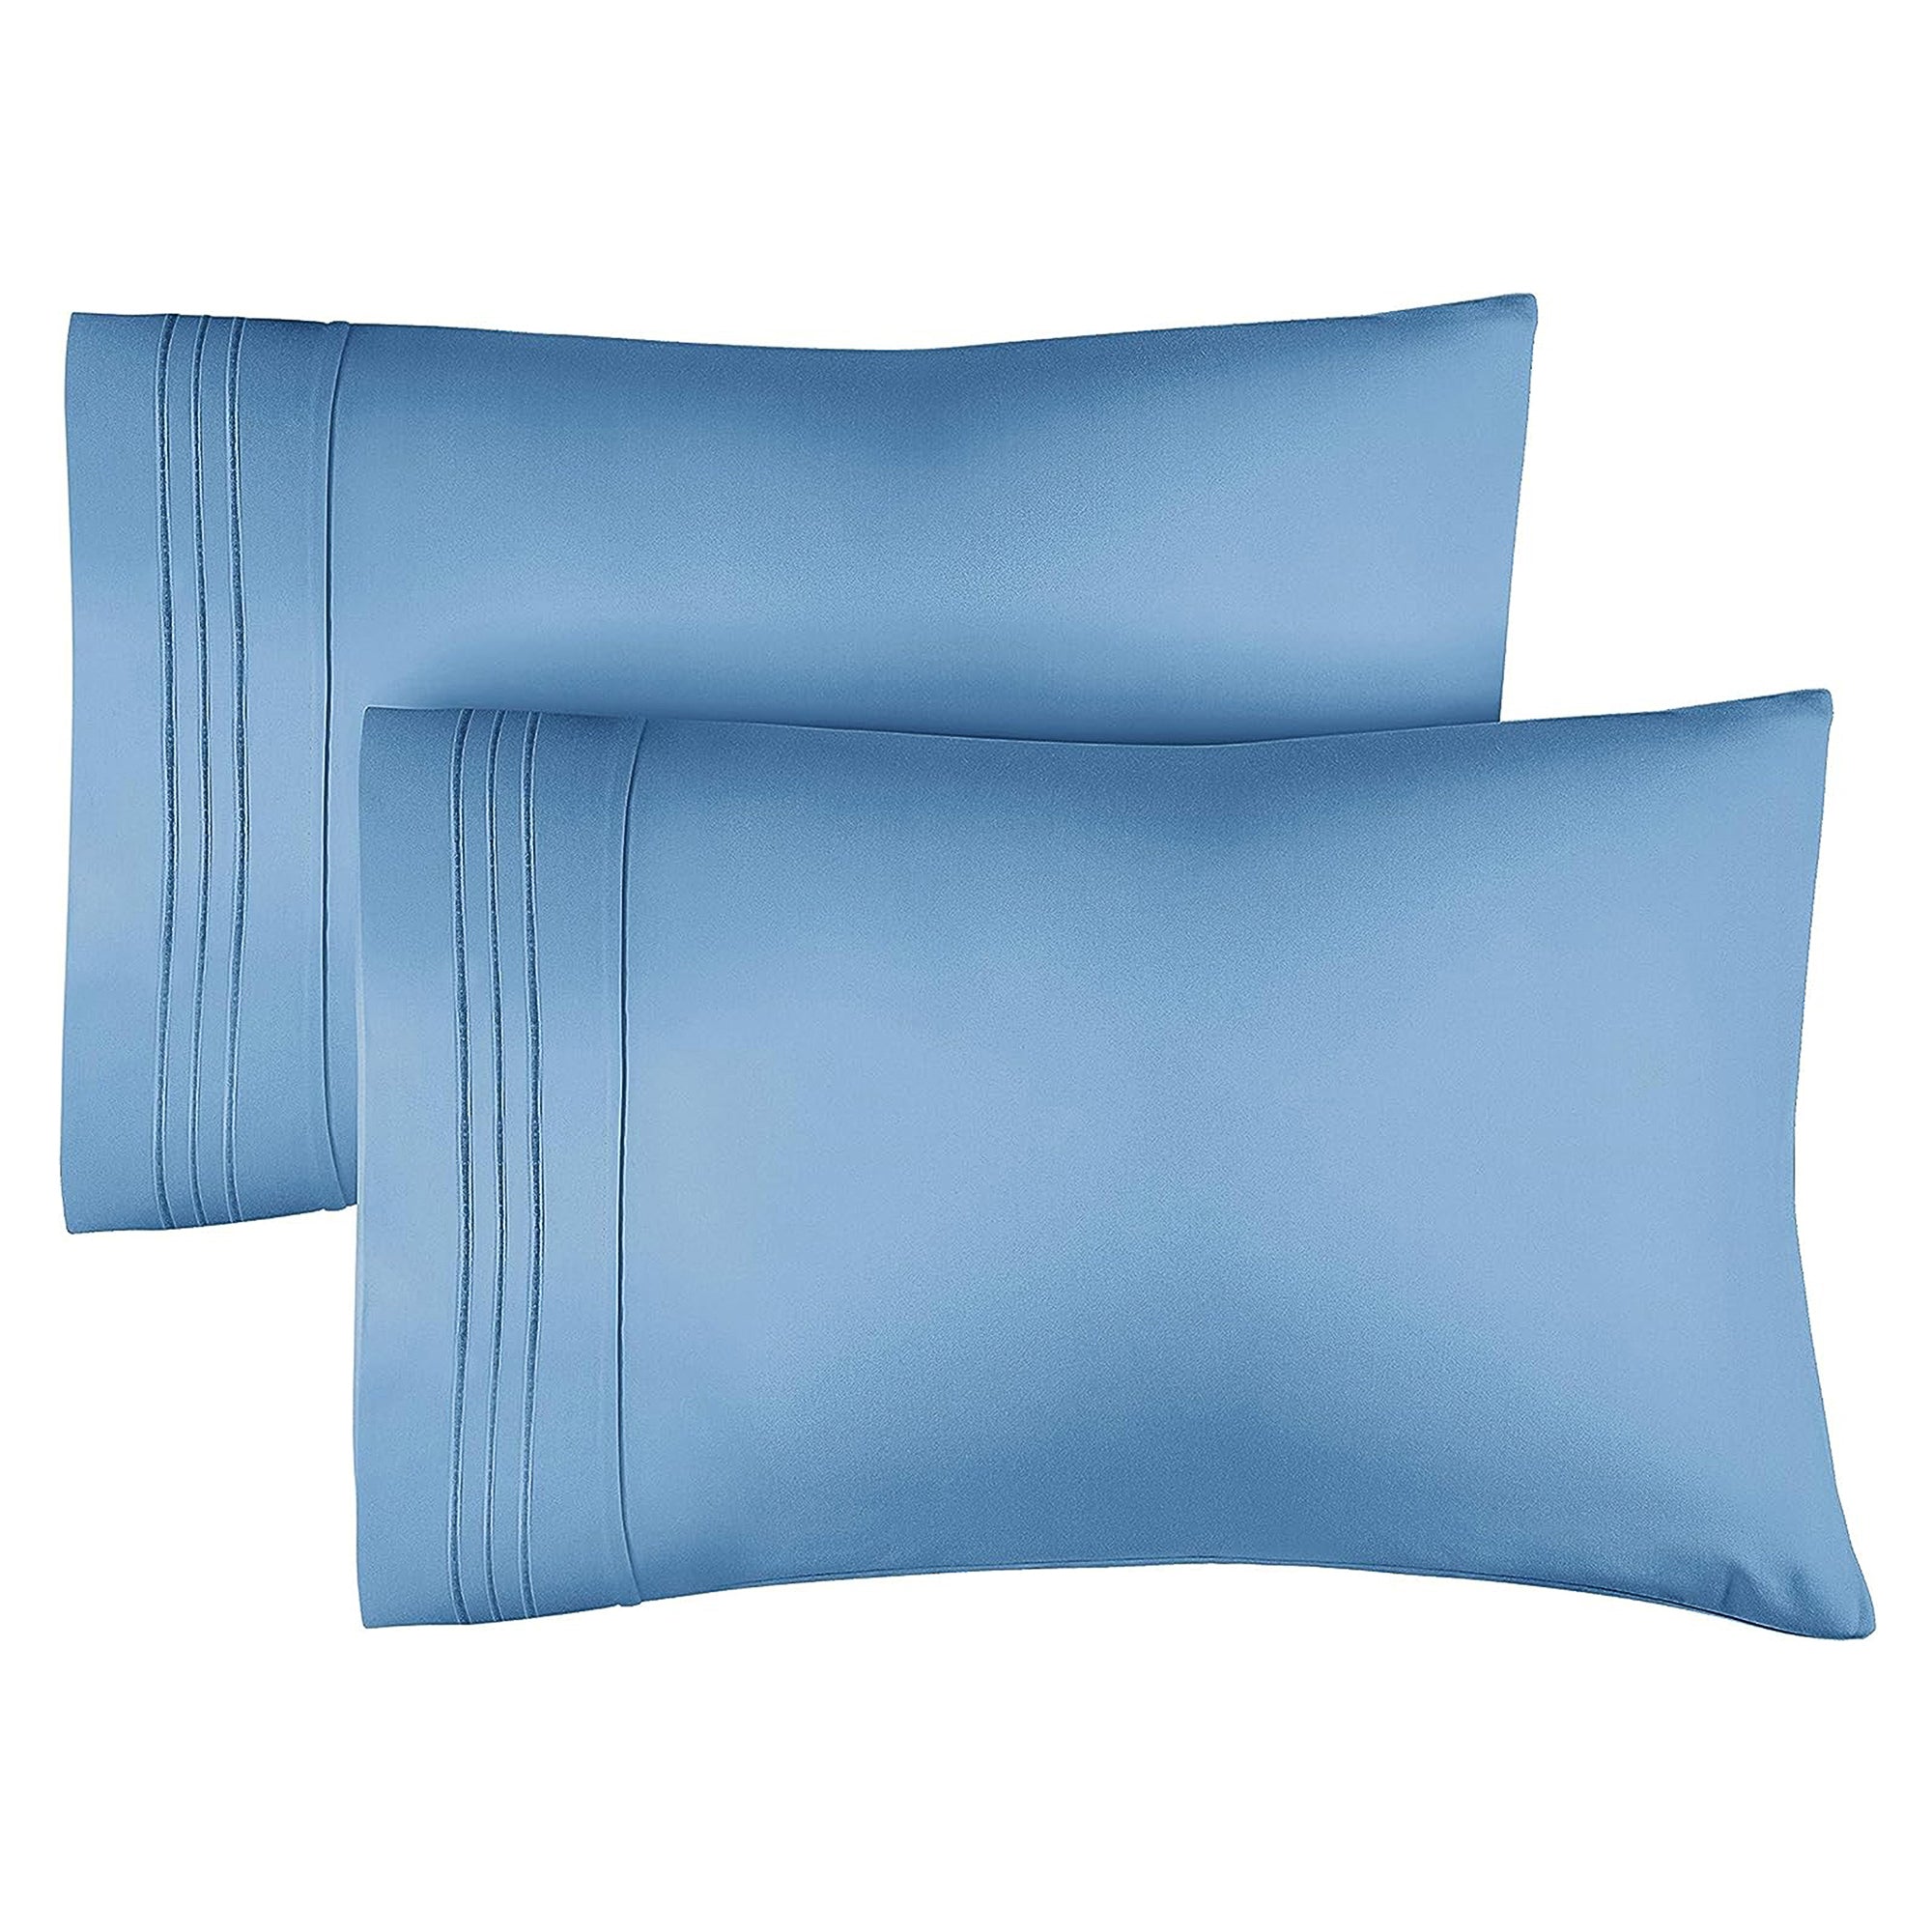 2 Pillowcase Set - Denim Blue